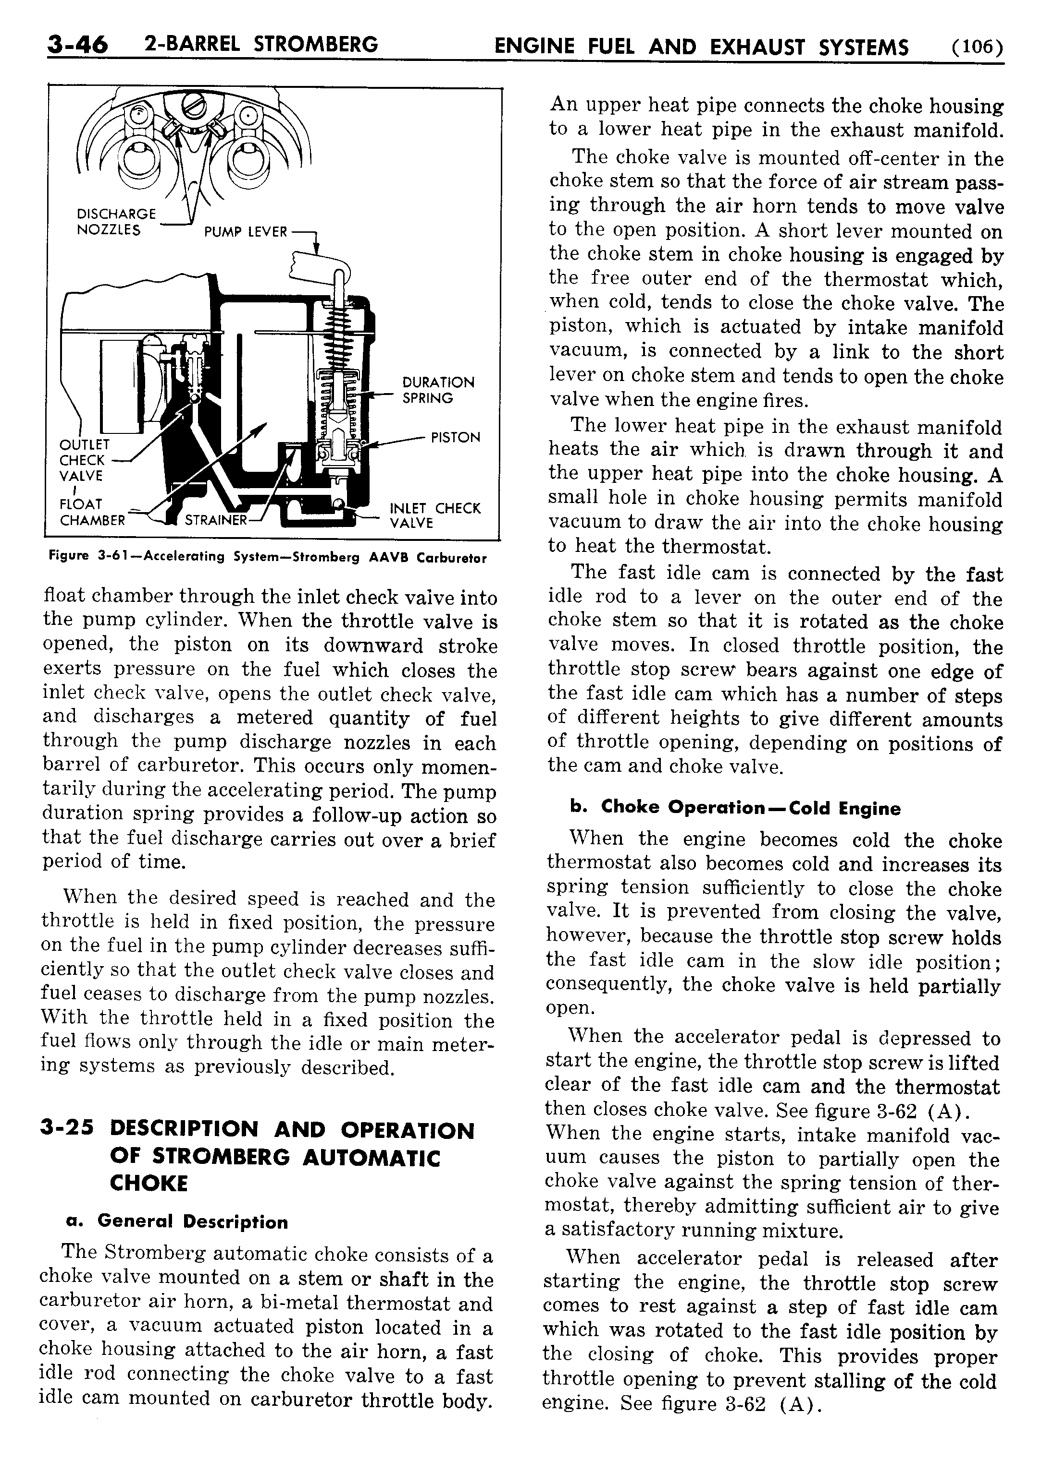 n_04 1955 Buick Shop Manual - Engine Fuel & Exhaust-046-046.jpg